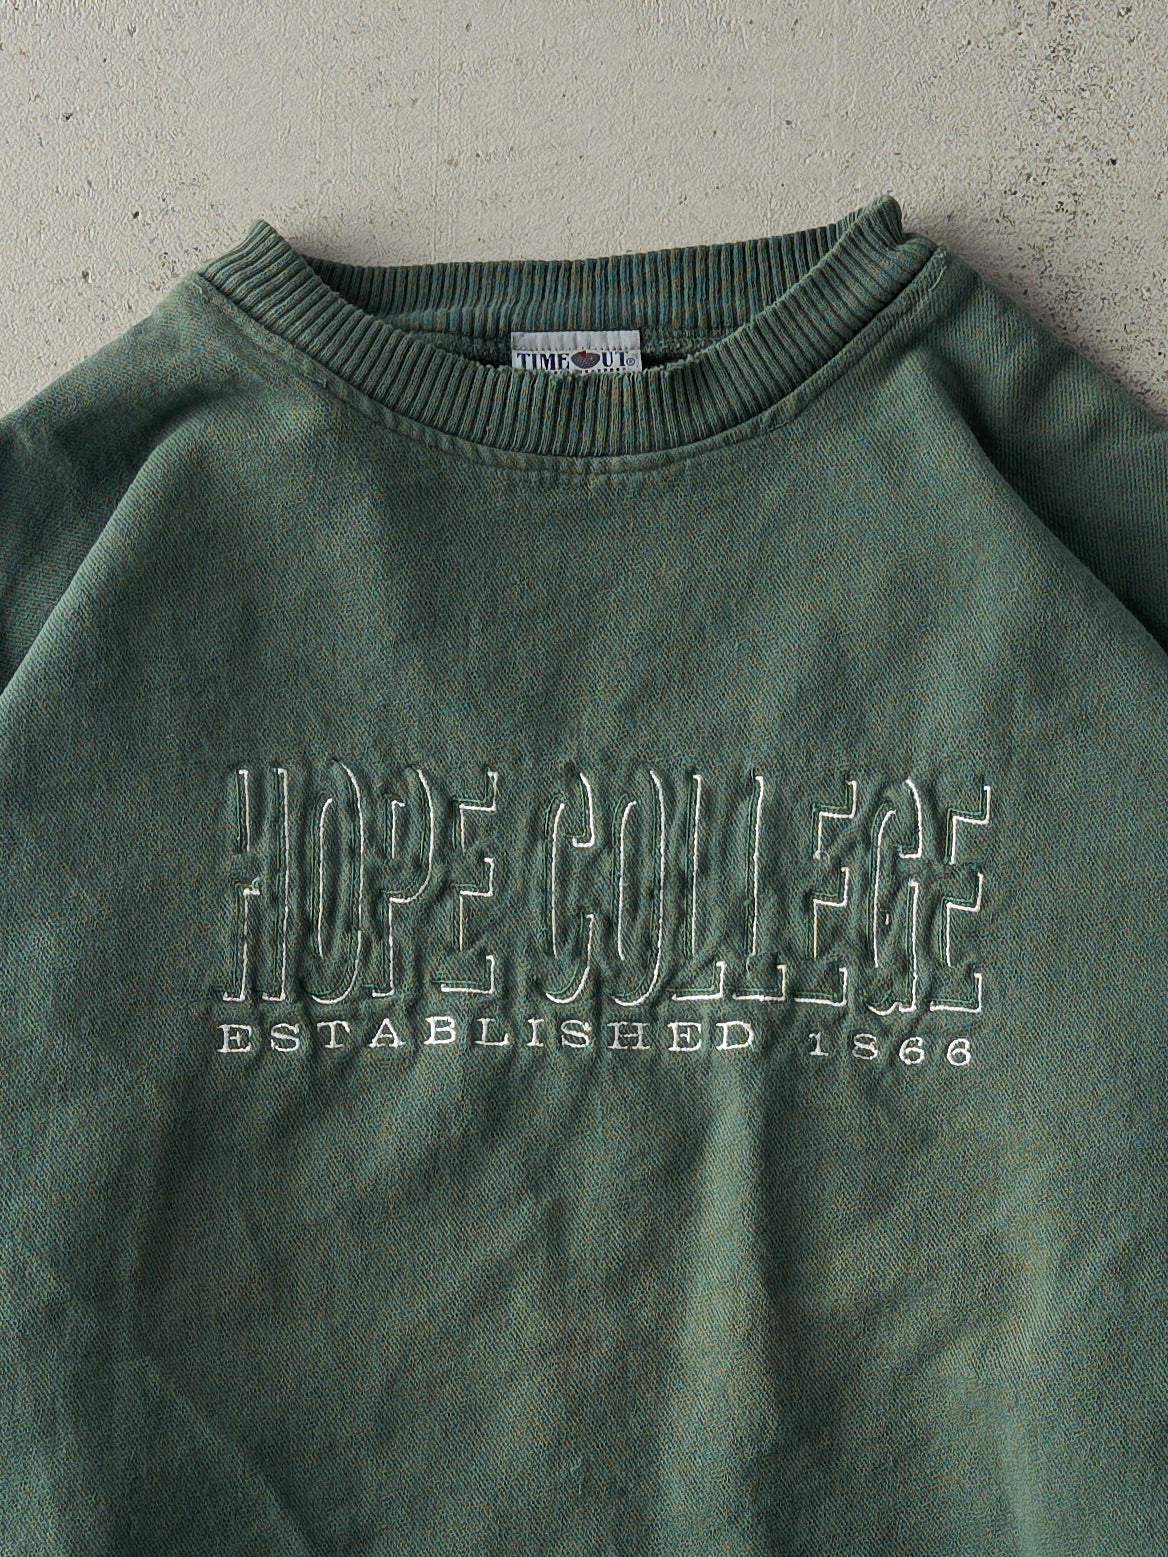 Vintage 90s Green Hope College Reverse Weave Crewneck (XL)